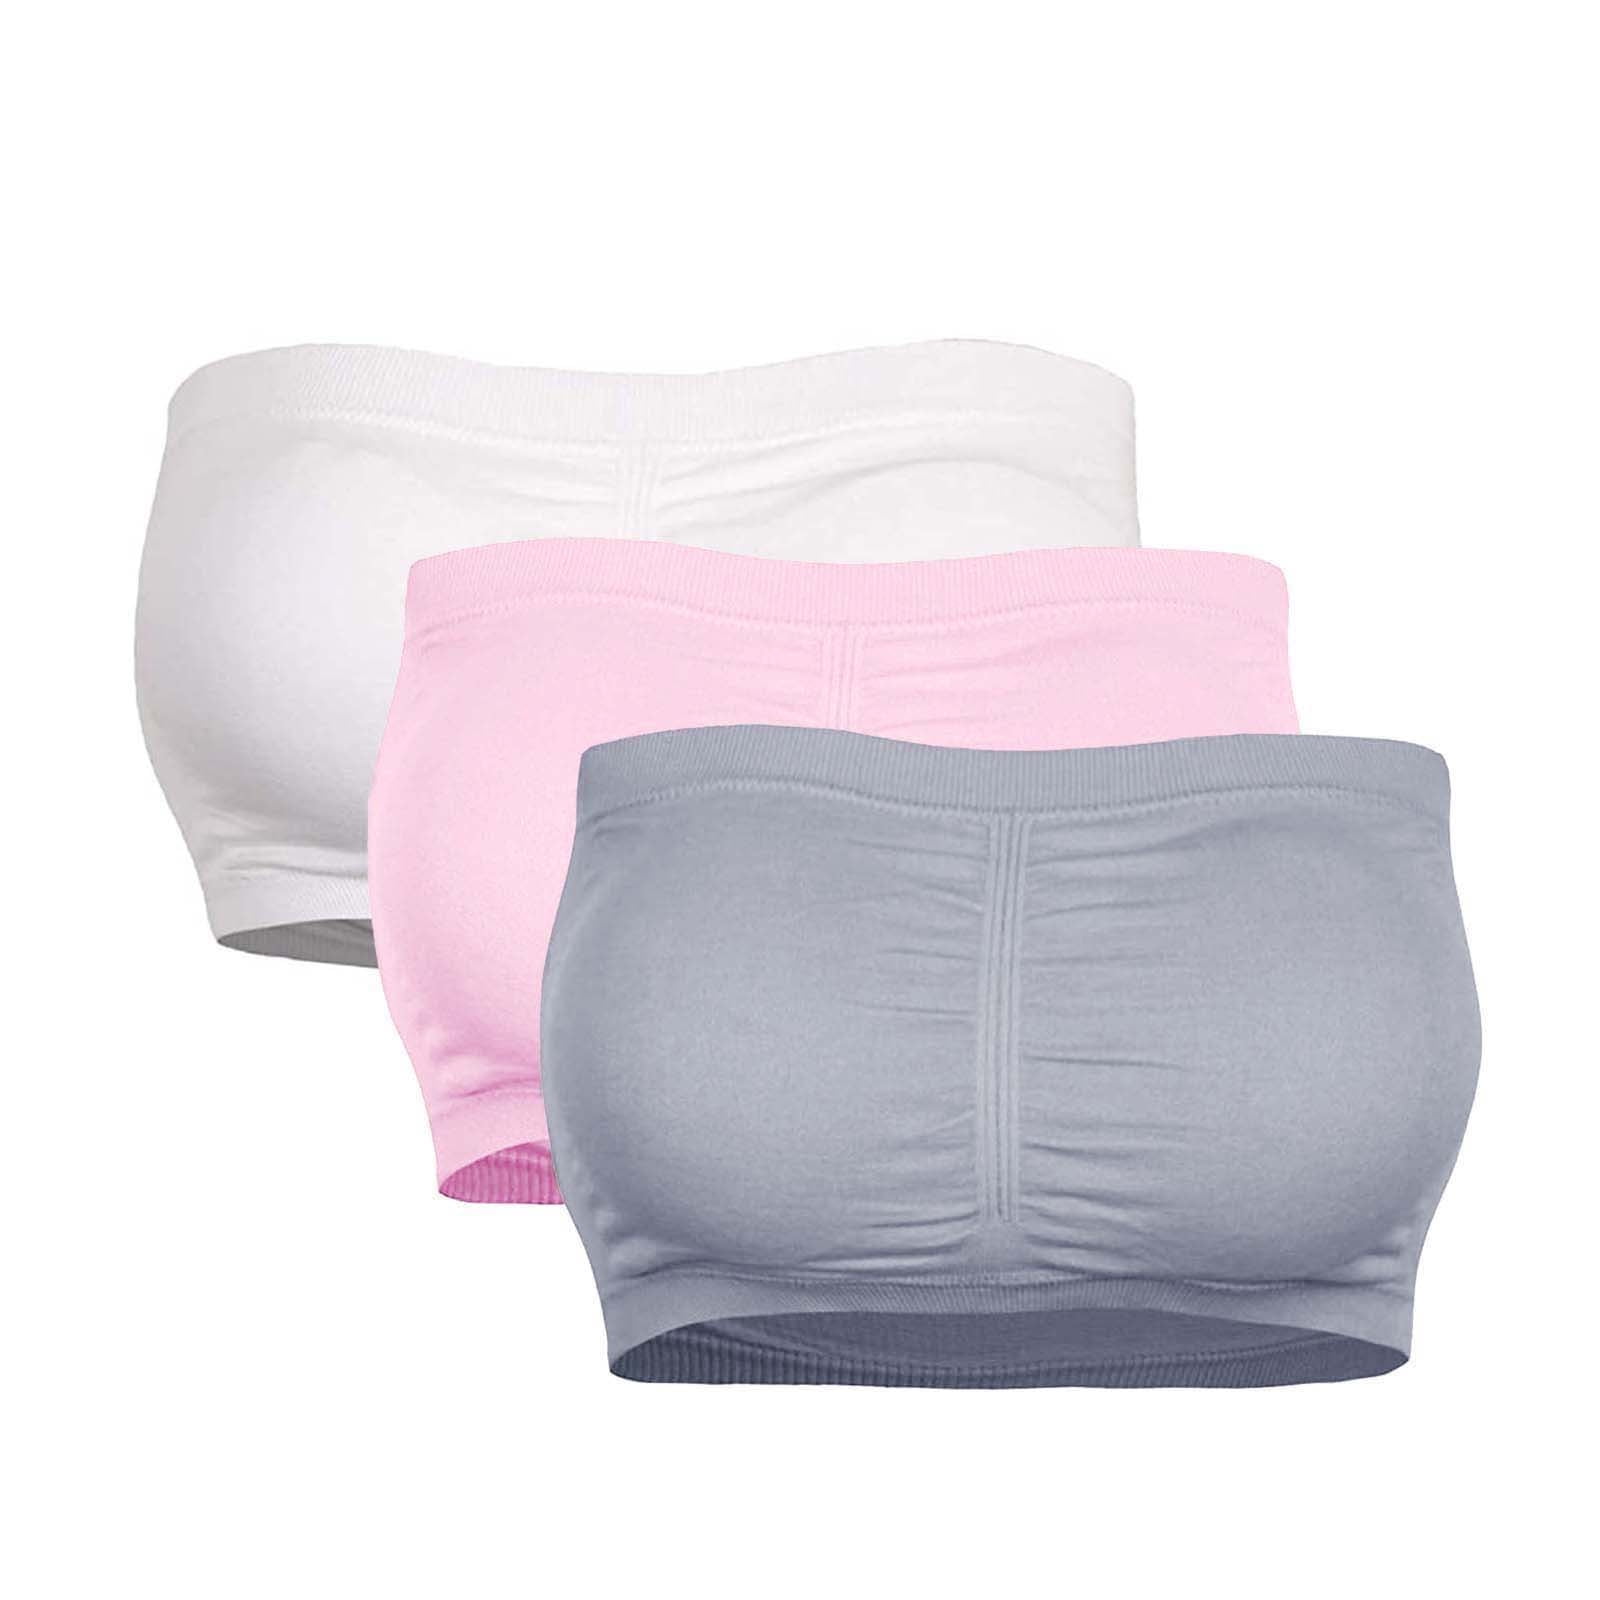 Eashery Underoutfit Bras for Women Women's Strapless Padded Push